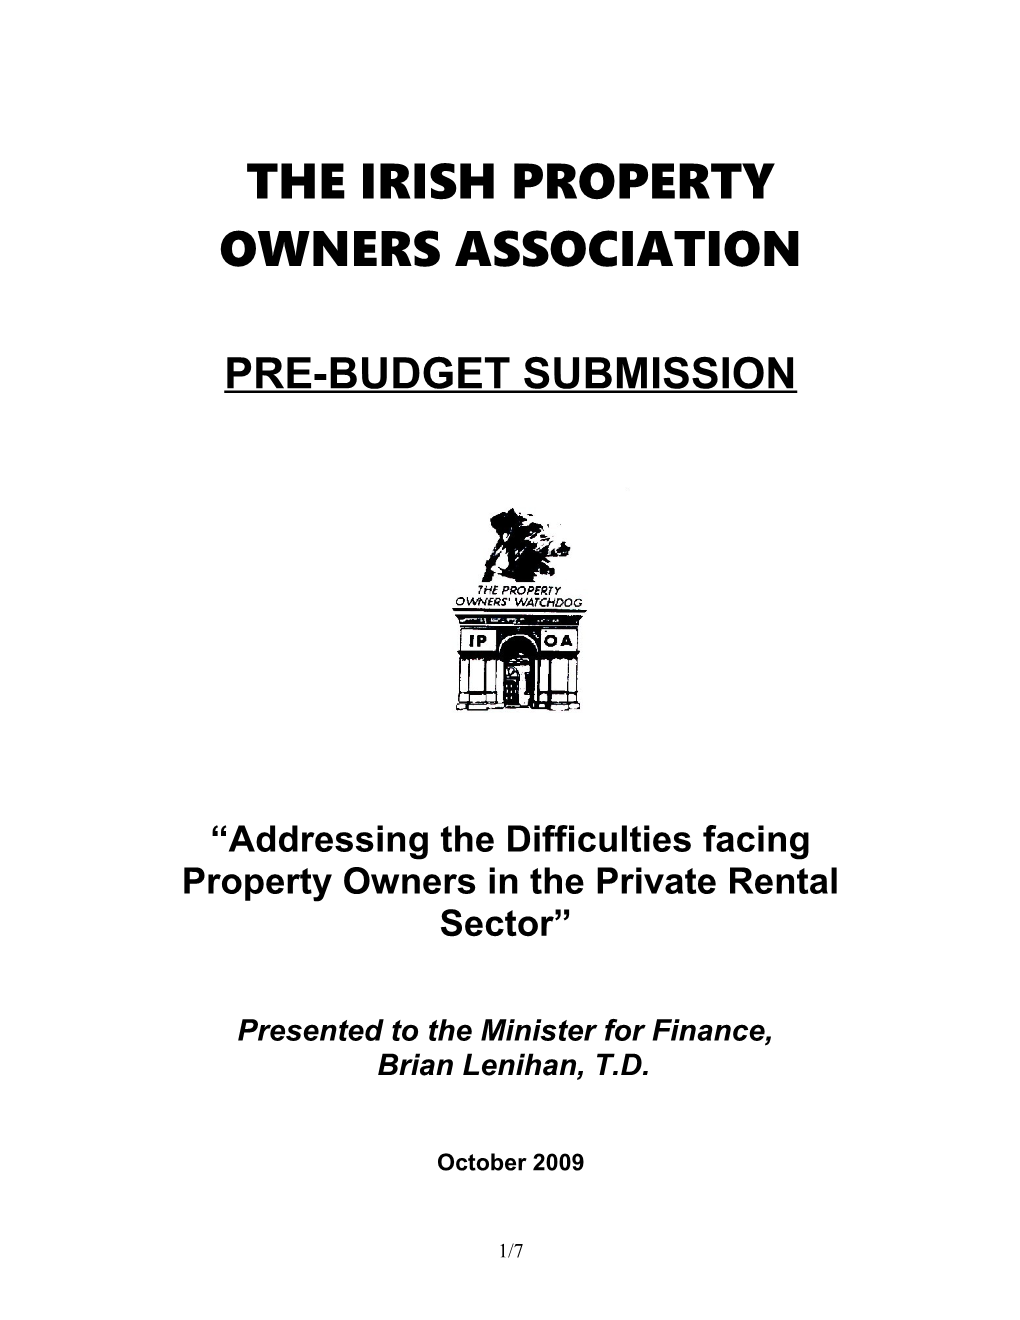 The Irish Property Owners Association